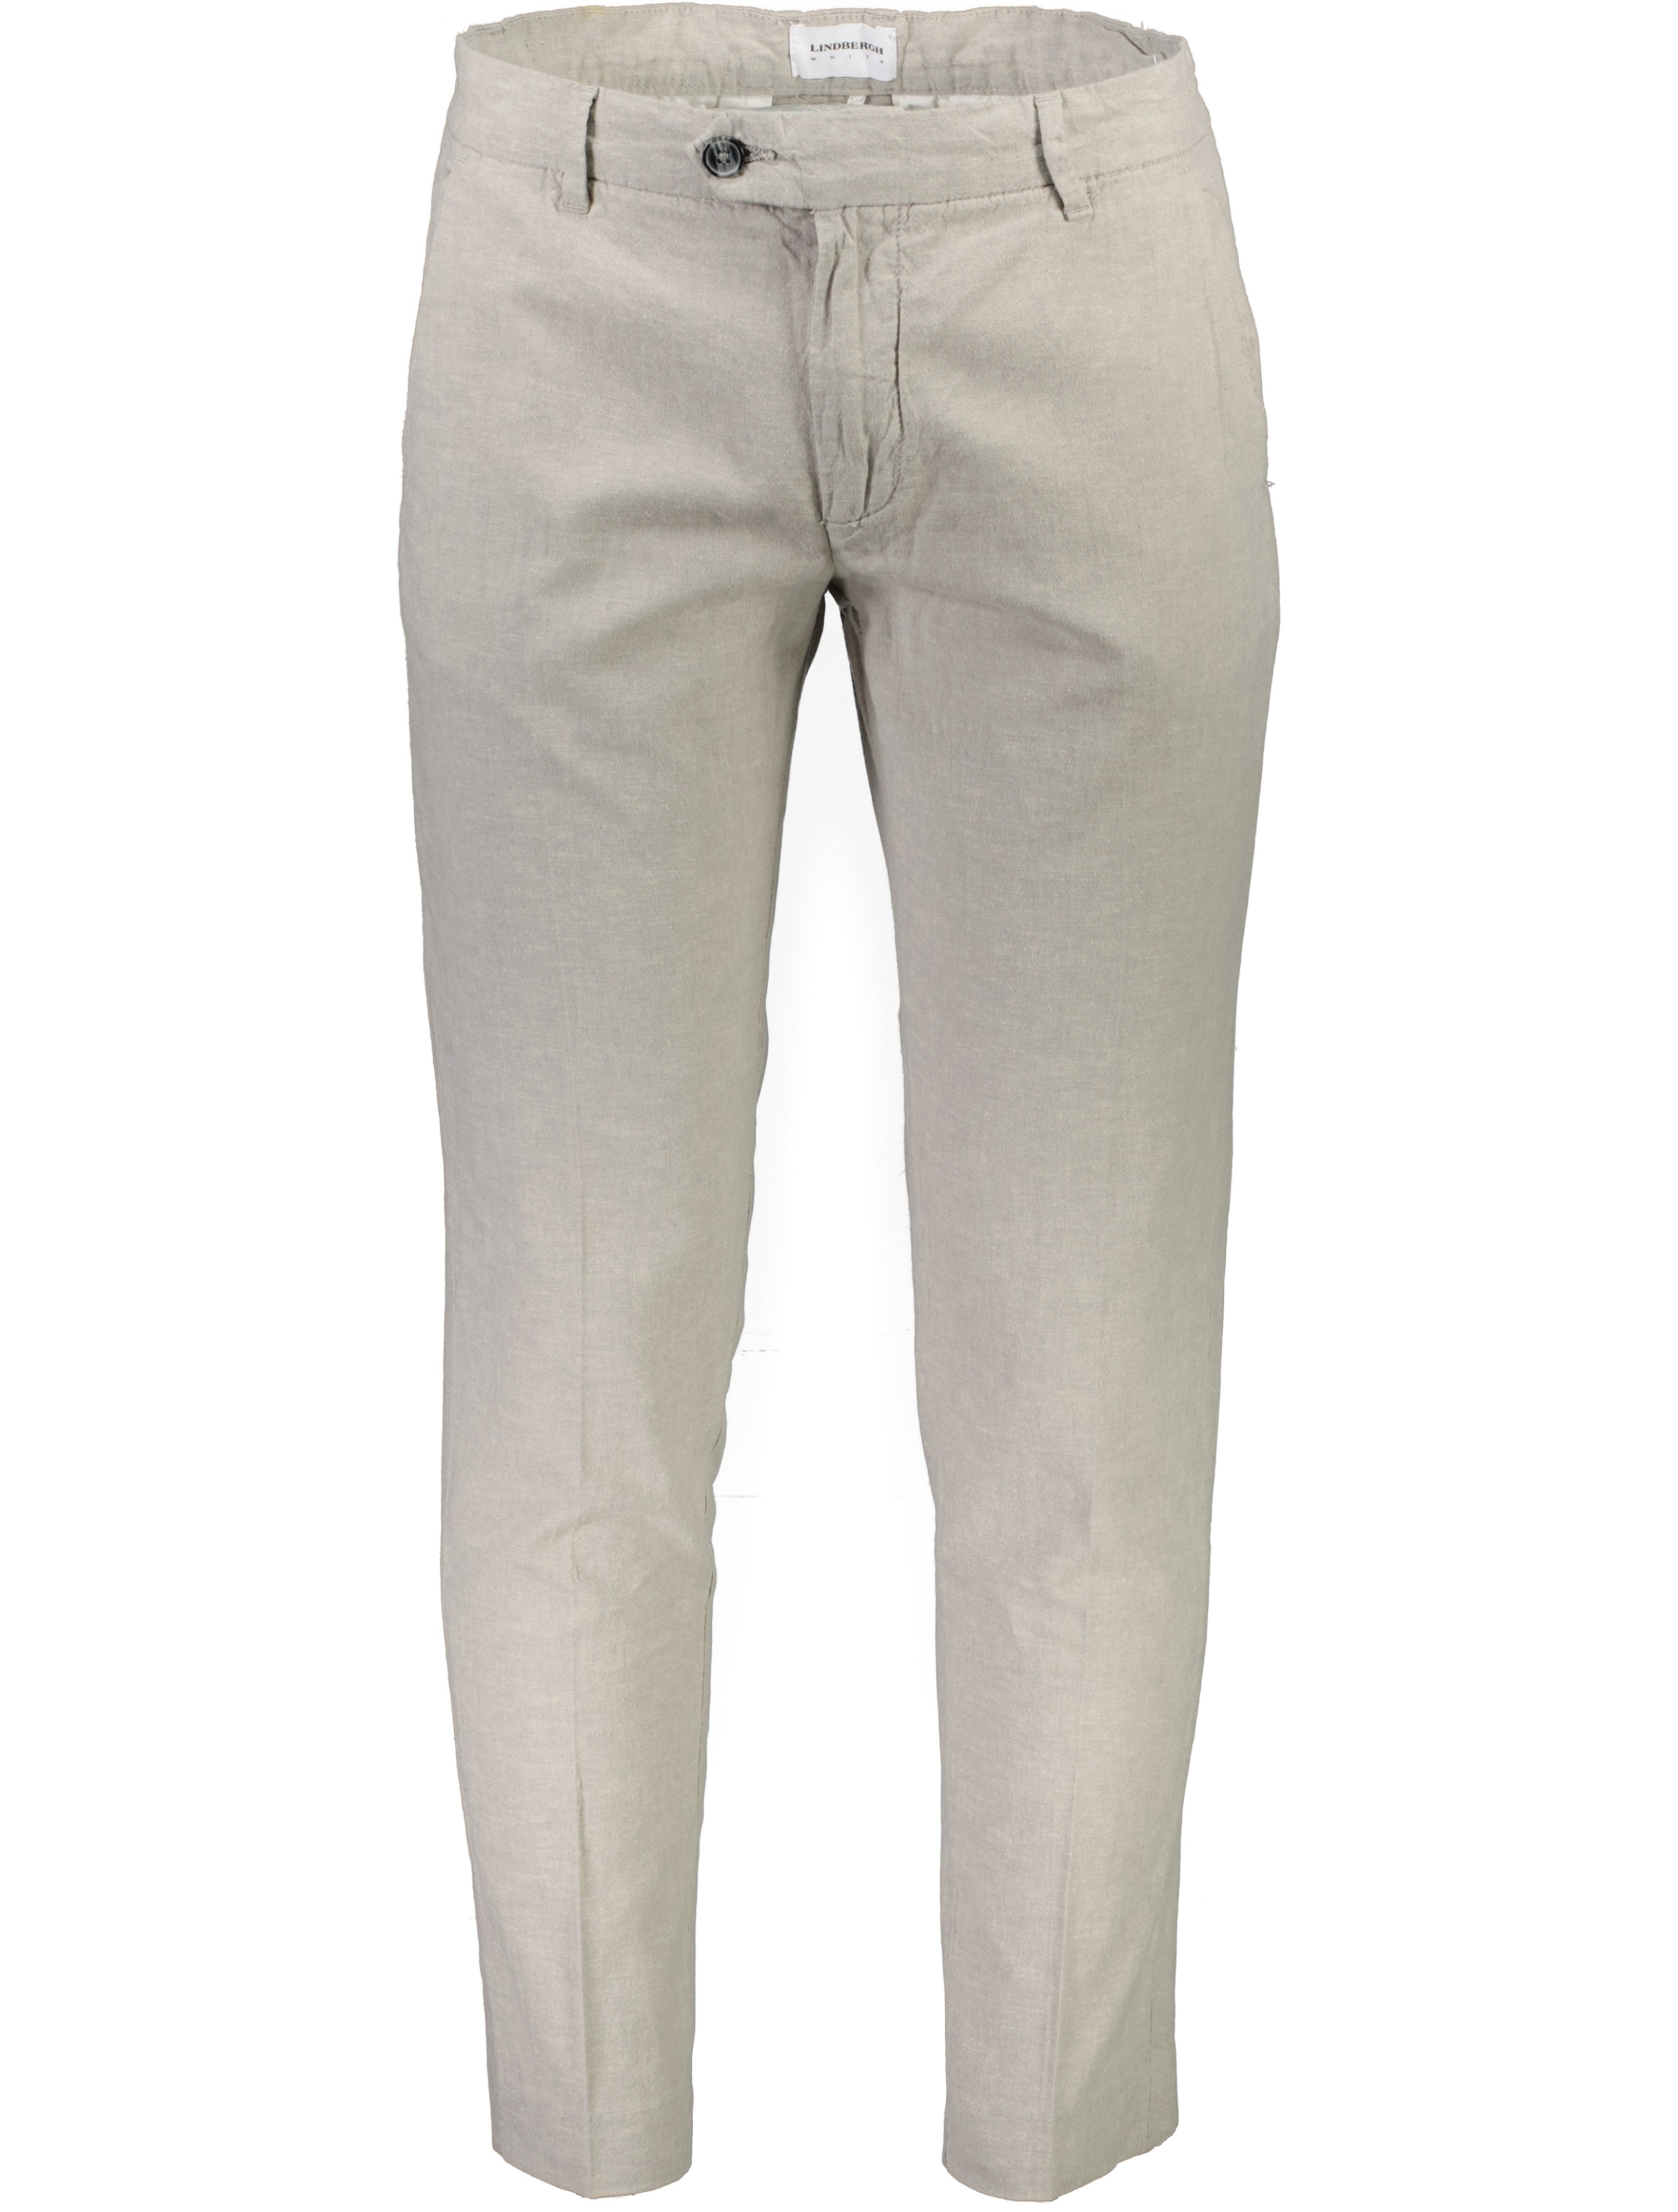 Lindbergh Casual pants grey / grey